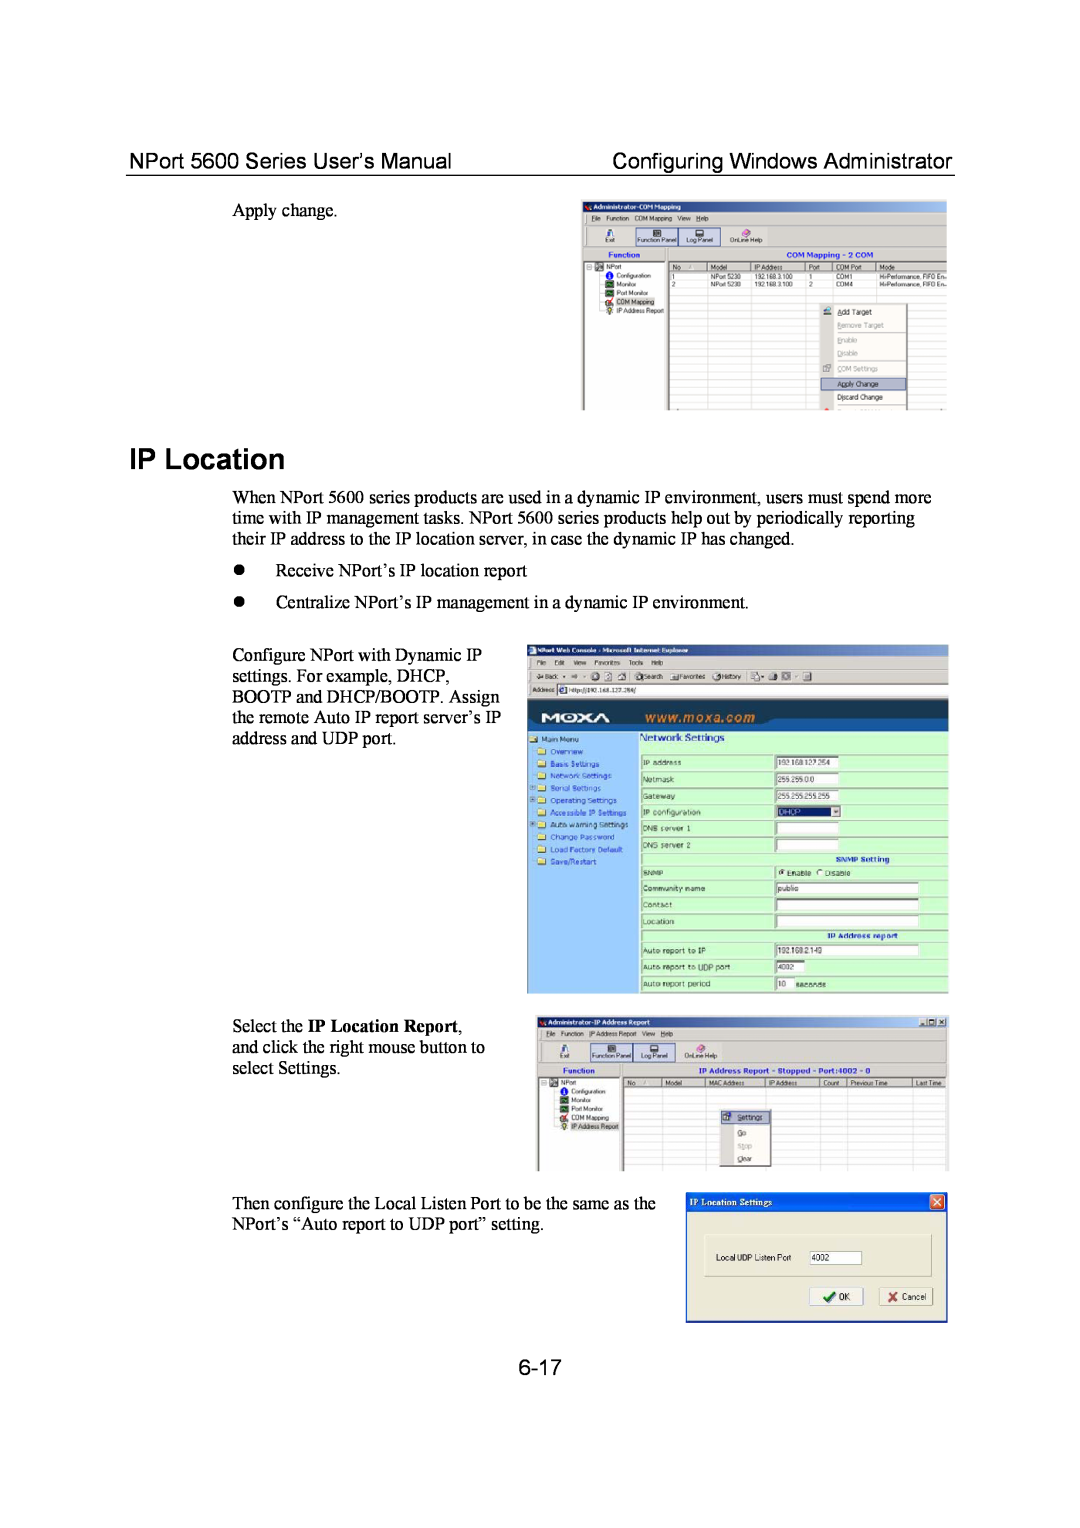 Moxa Technologies user manual IP Location, 6-17, NPort 5600 Series User’s Manual, Configuring Windows Administrator 